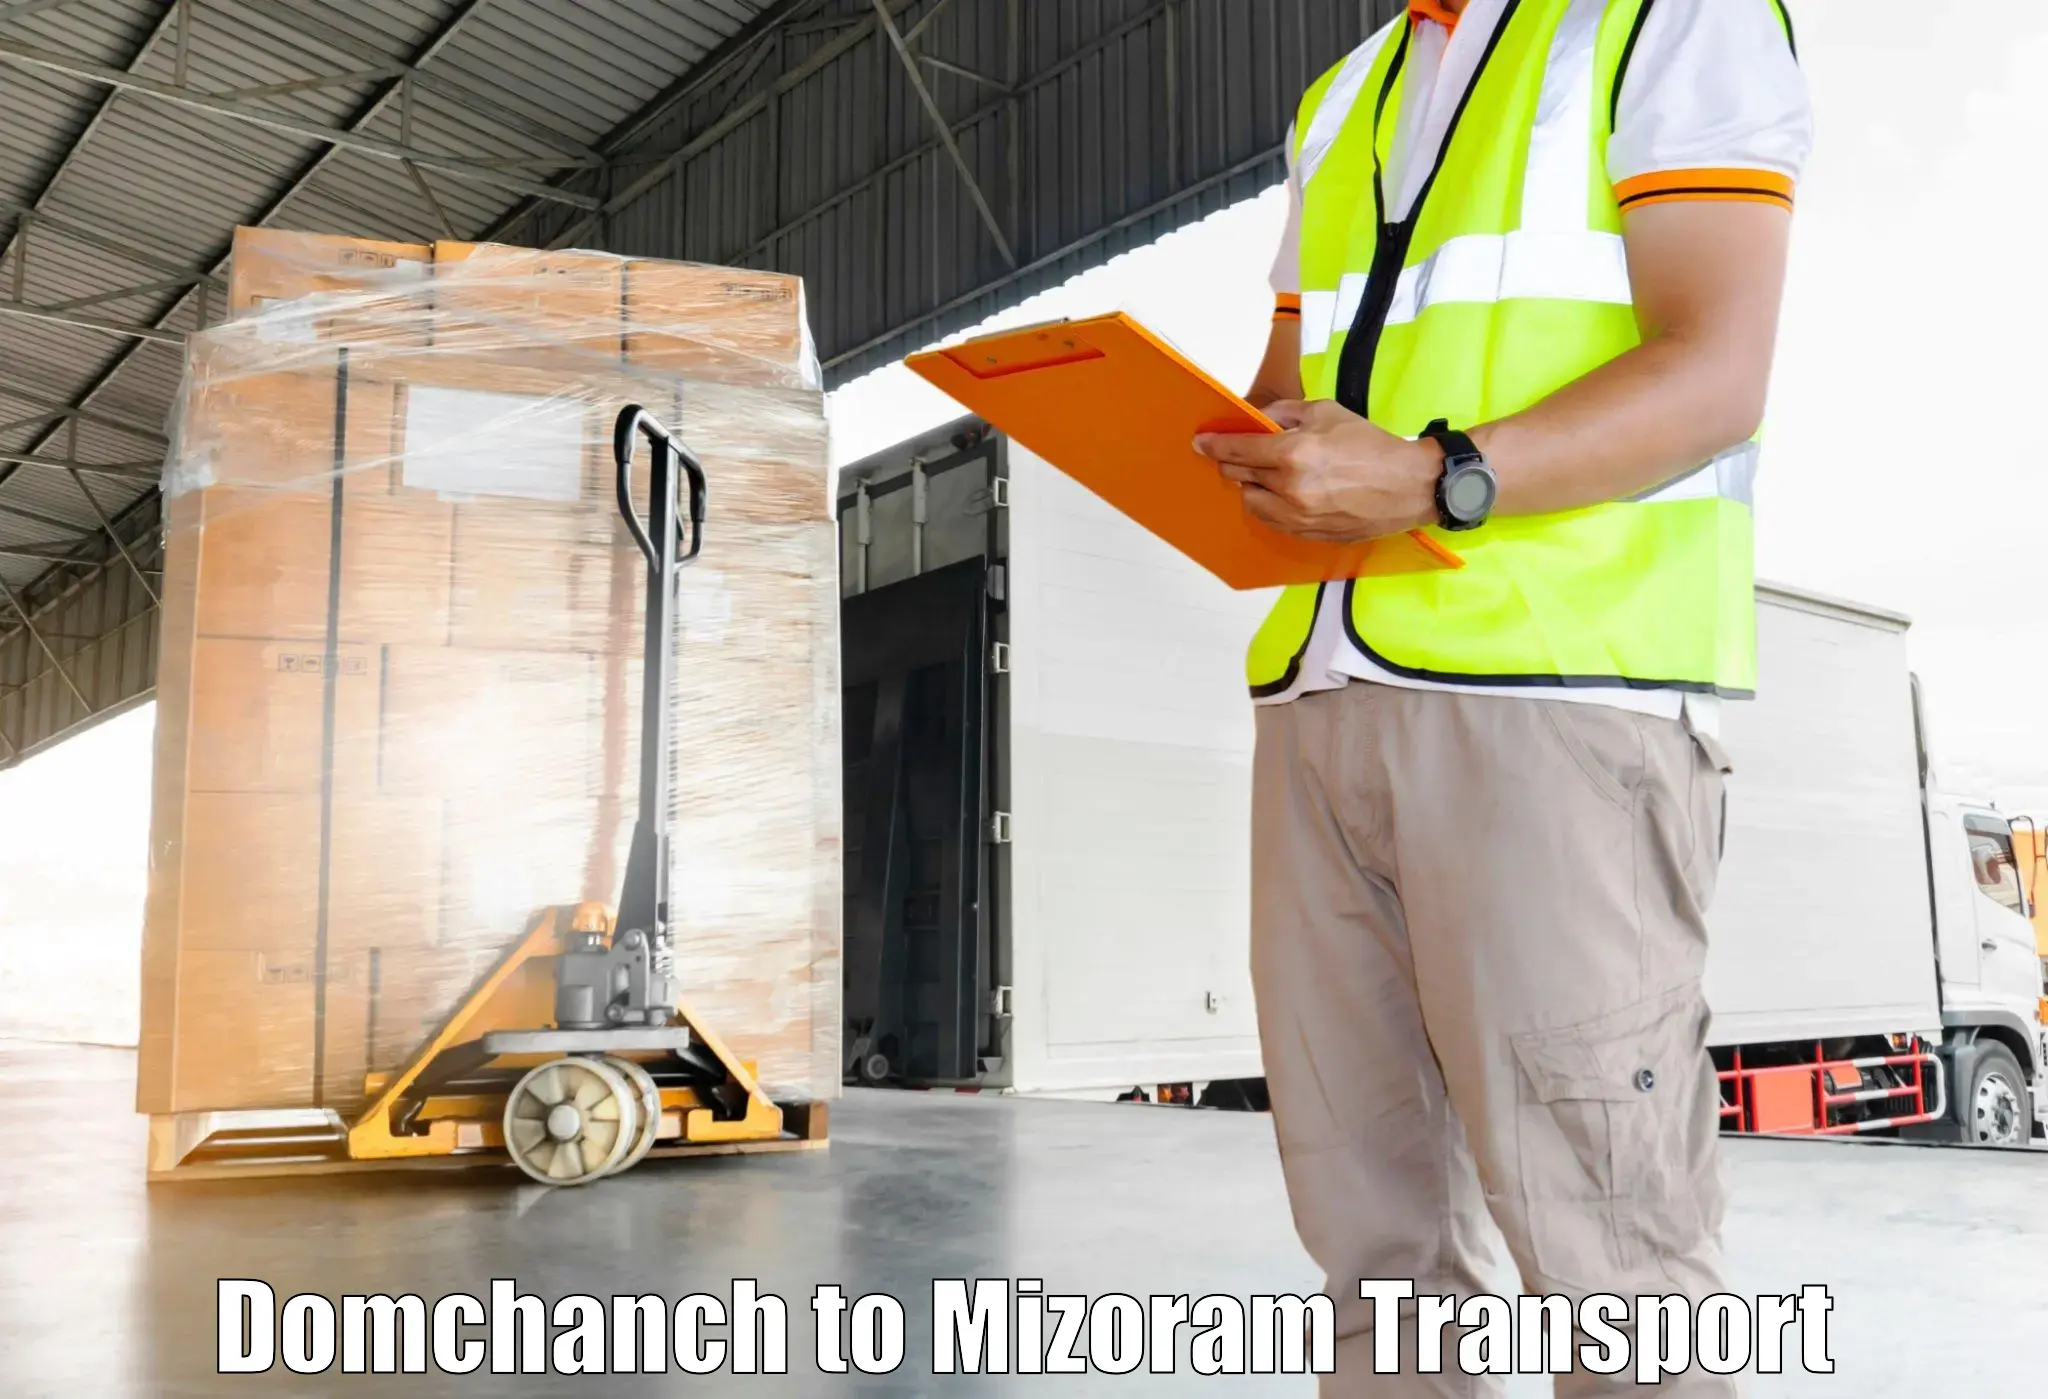 Daily parcel service transport Domchanch to Mizoram